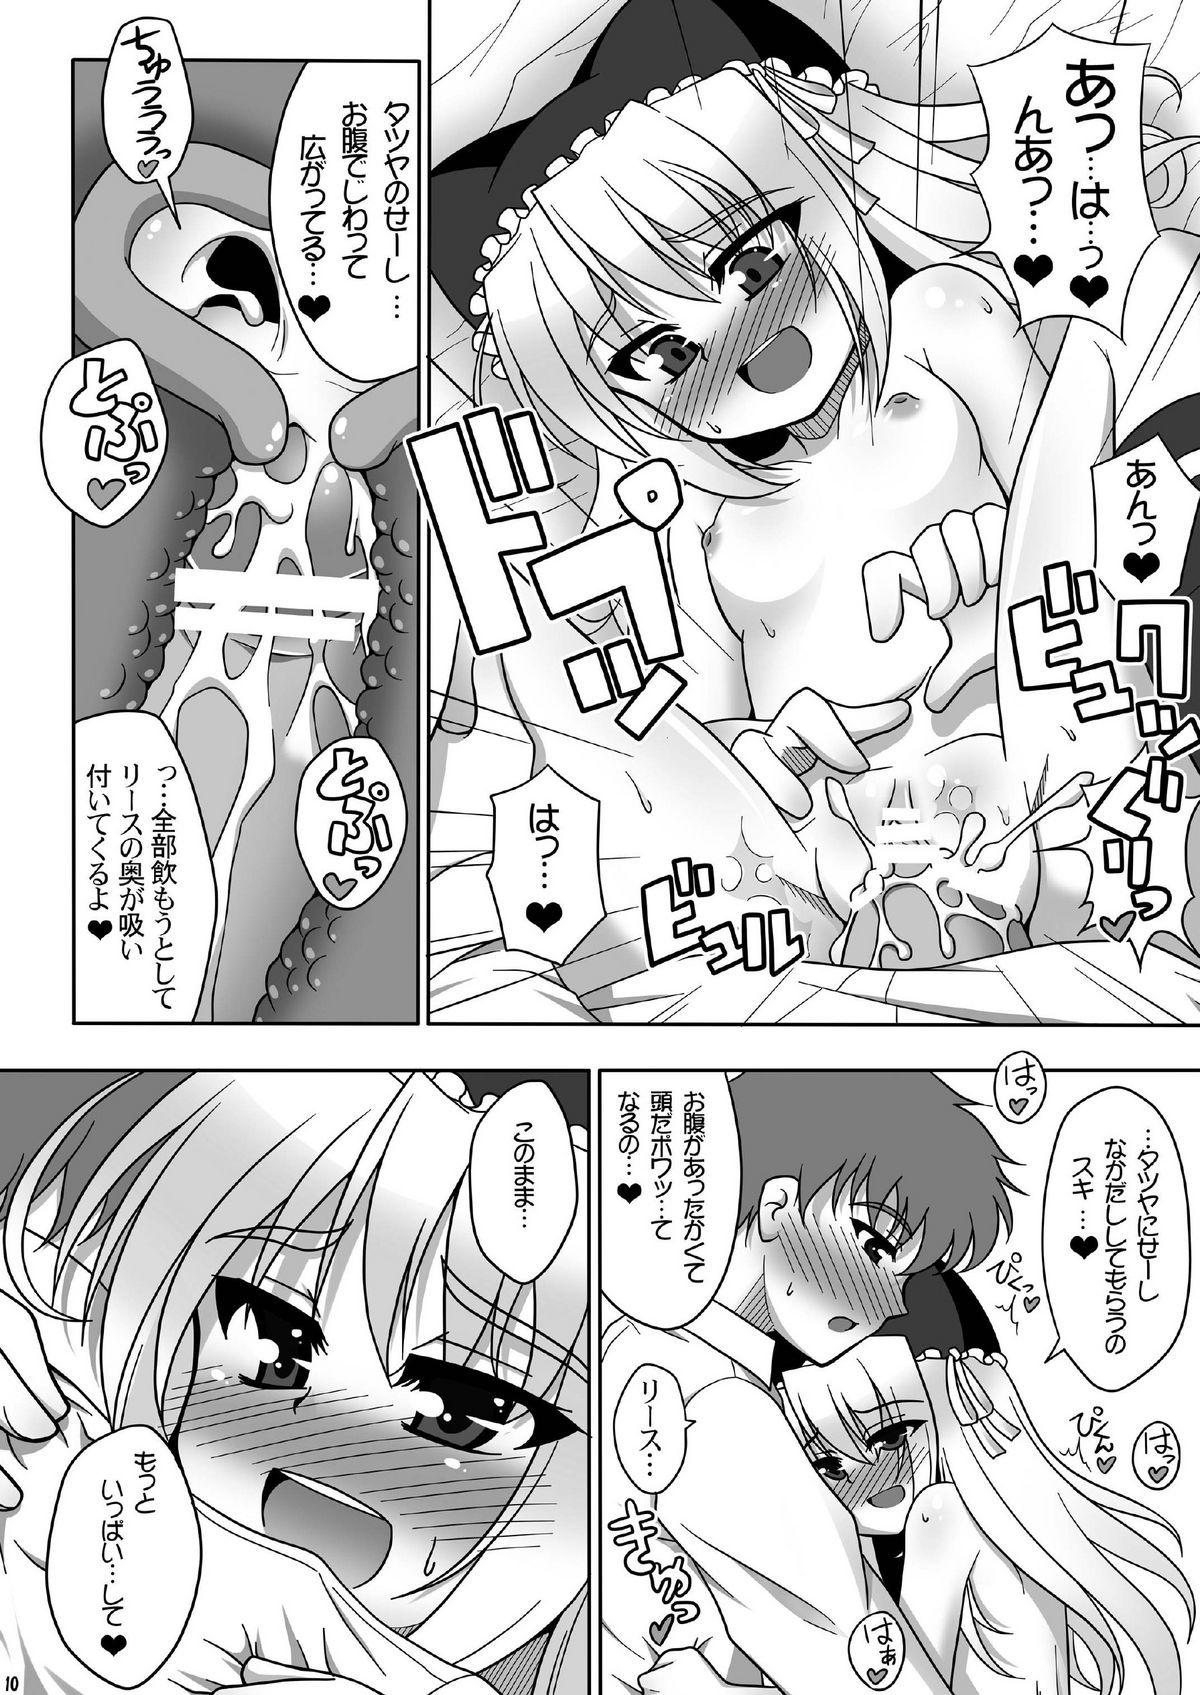 Story Risu LOVERS - Yoake mae yori ruriiro na Nudity - Page 10